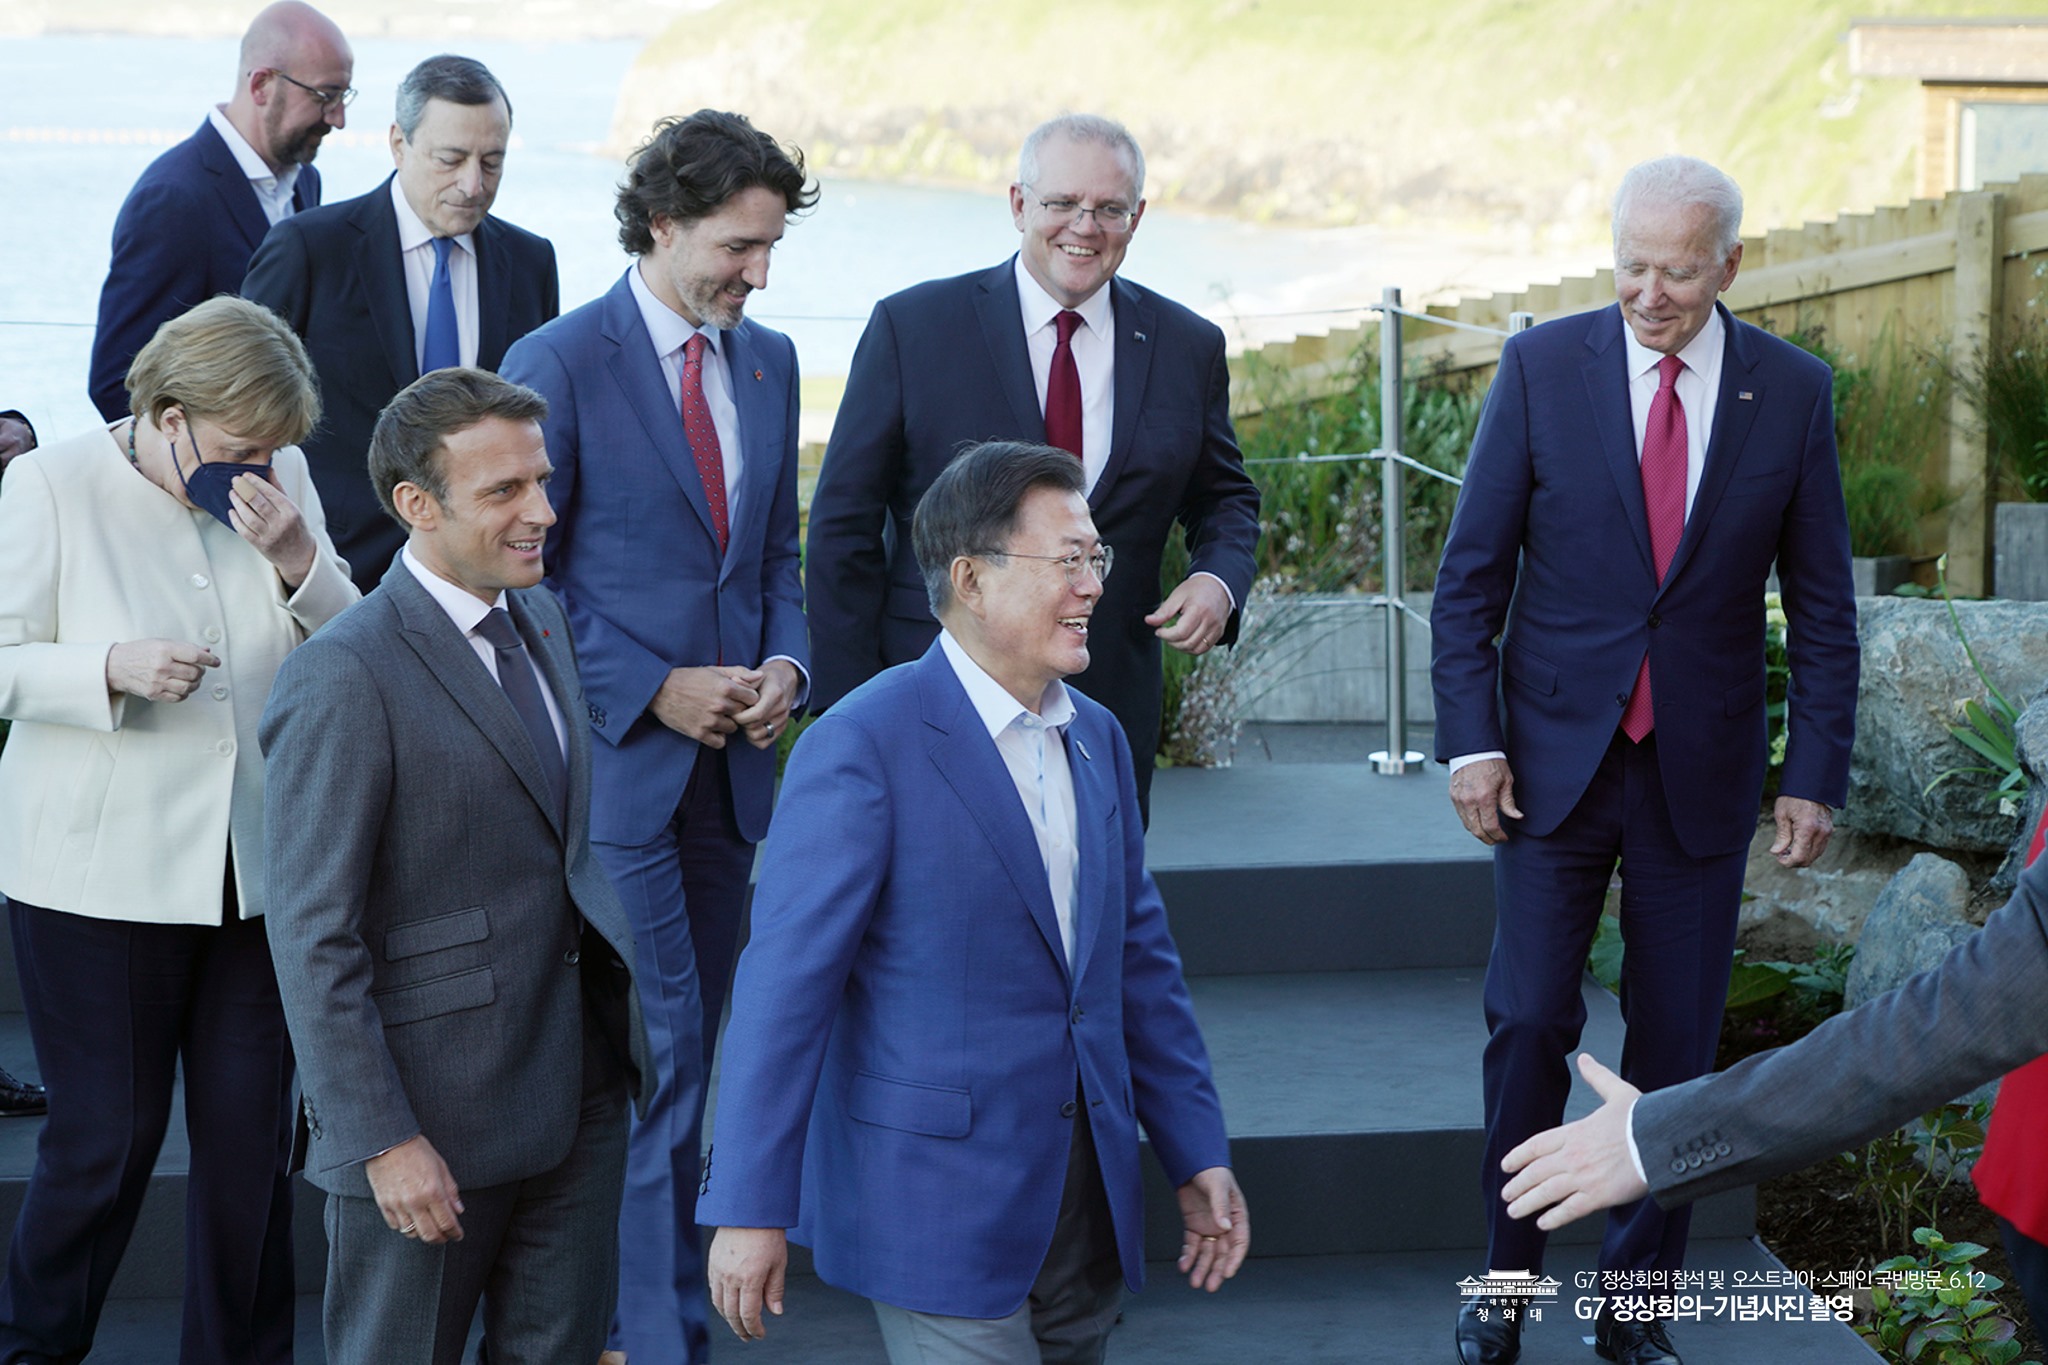 2021 G7 정상회의 참석 및 오스트리아-스페인 국빈방문_6.12
G7 정상회의-기념사진 촬영